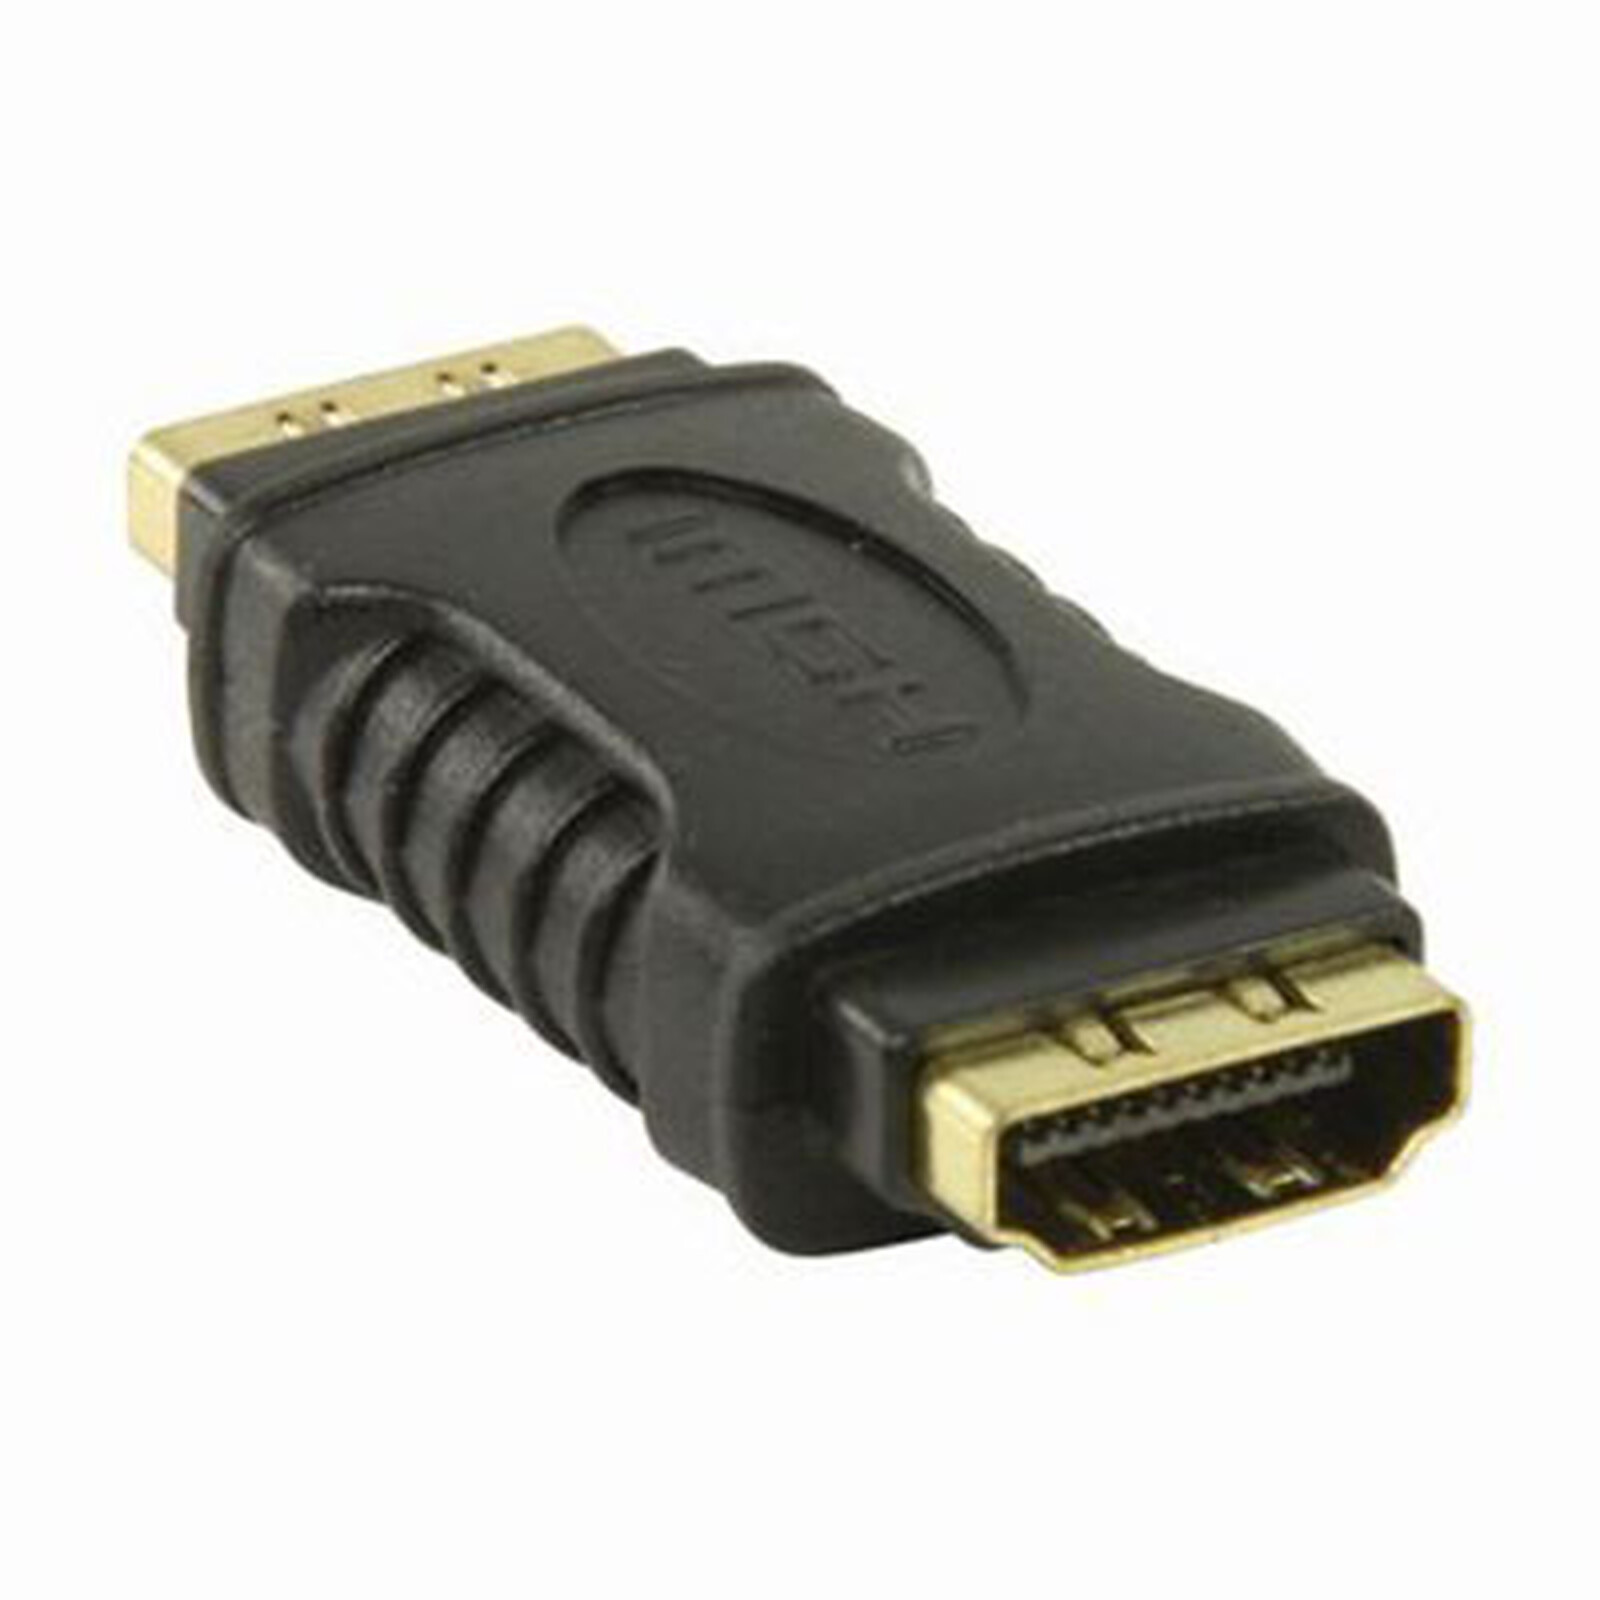 Nedis HDMI Splitter 4K (2 Sorties) - HDMI - Garantie 3 ans LDLC